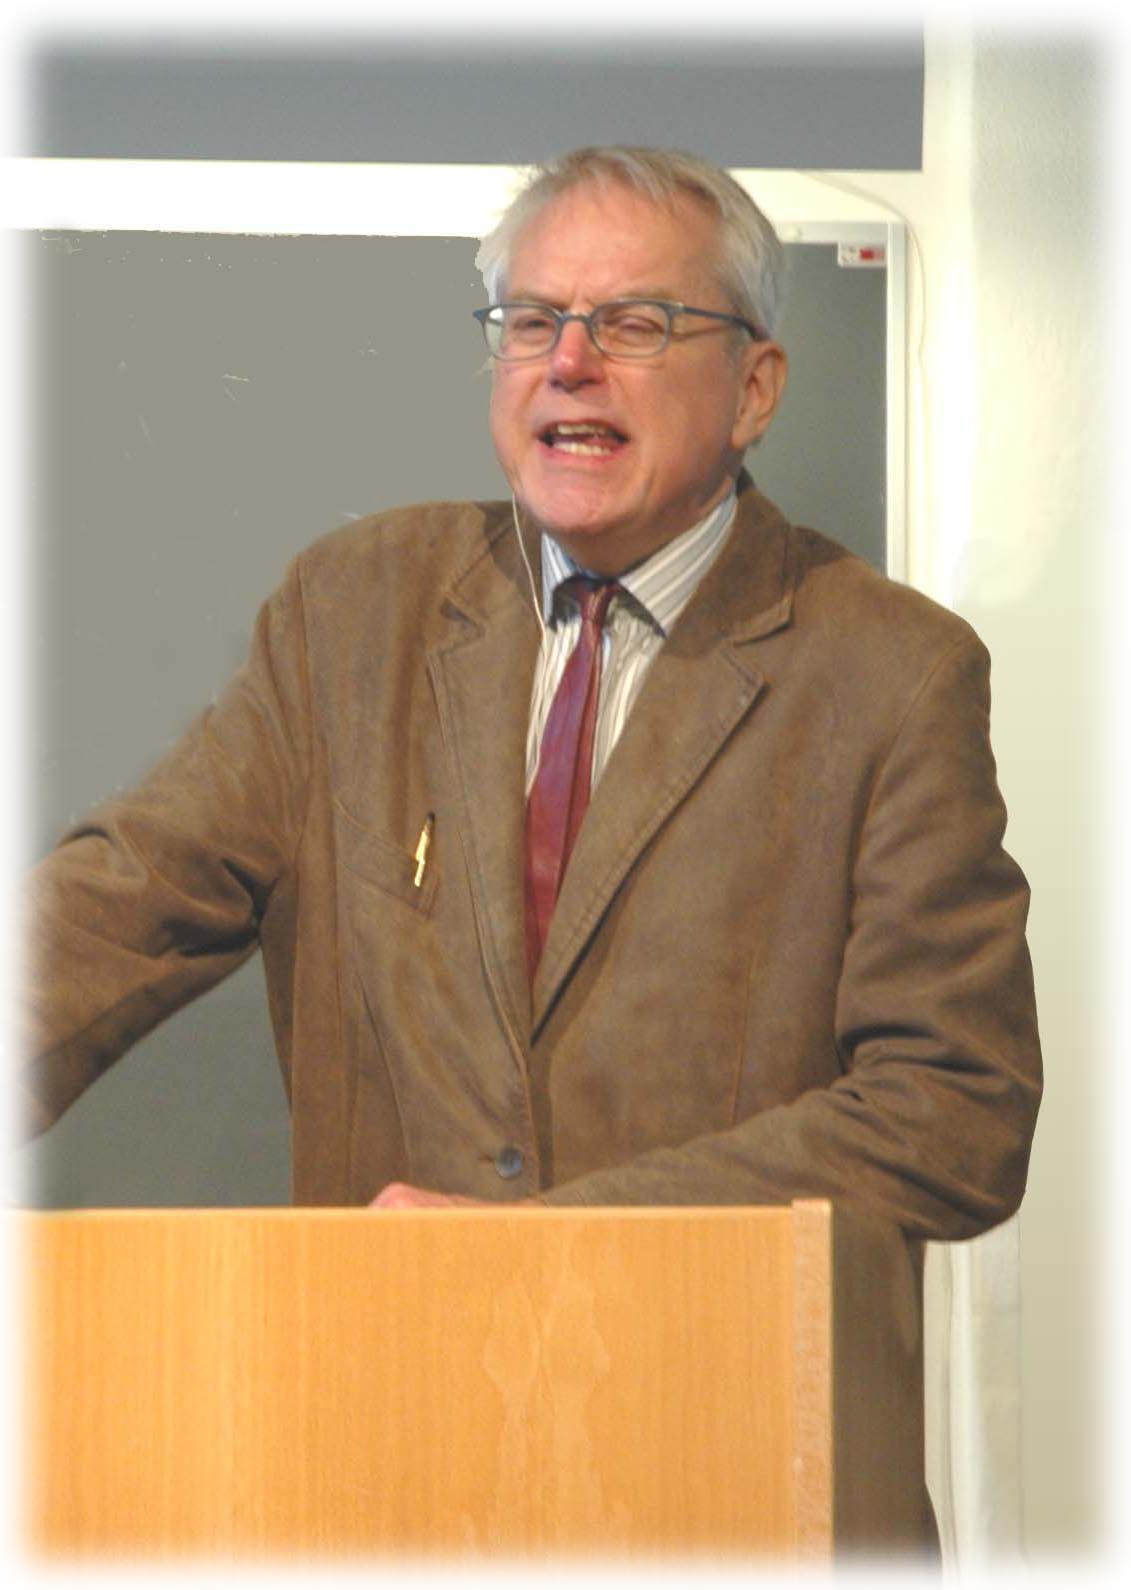 Peter Vrum, kursusarrangr